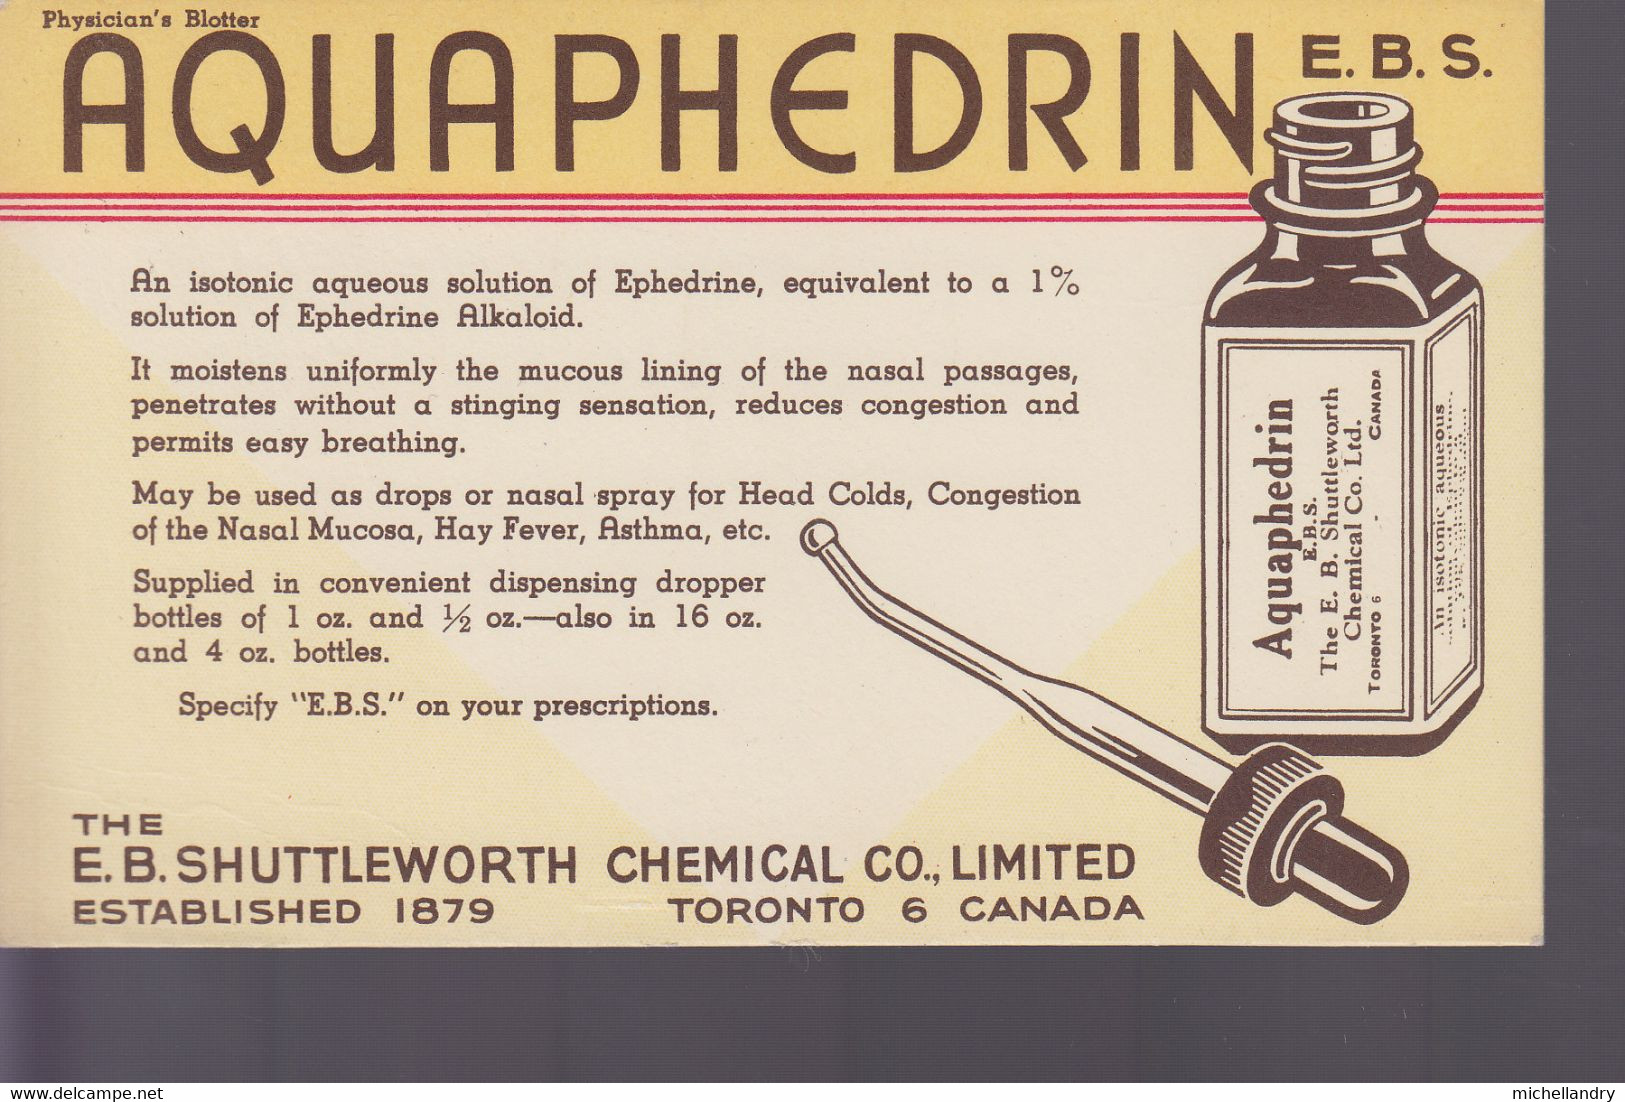 Pub (115915) Aquaphedrin E.B.S. The E.B.Shuttleworth Chemical Co Limited, Established 1879 Toronto 6 Canada - Placas De Cartón